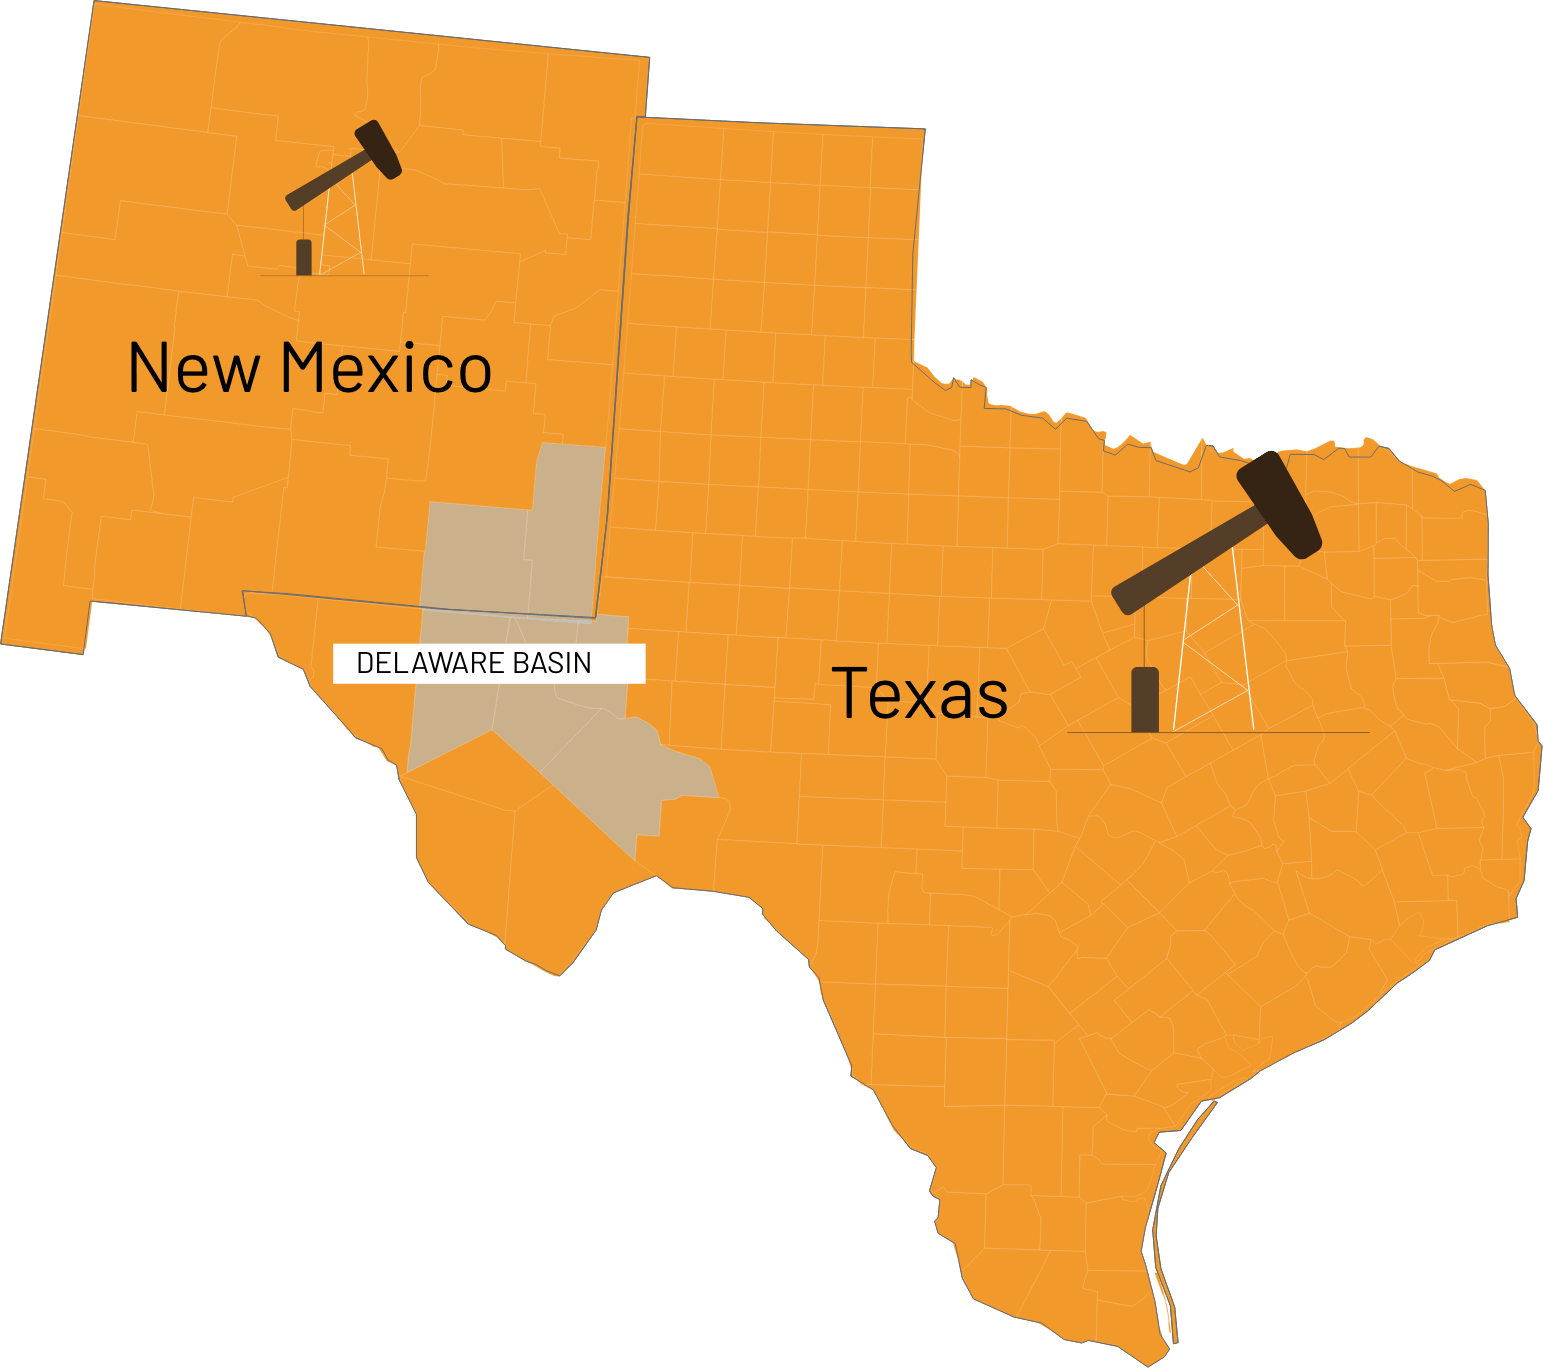 Acquisition Map Delaware Basin / New Mexico